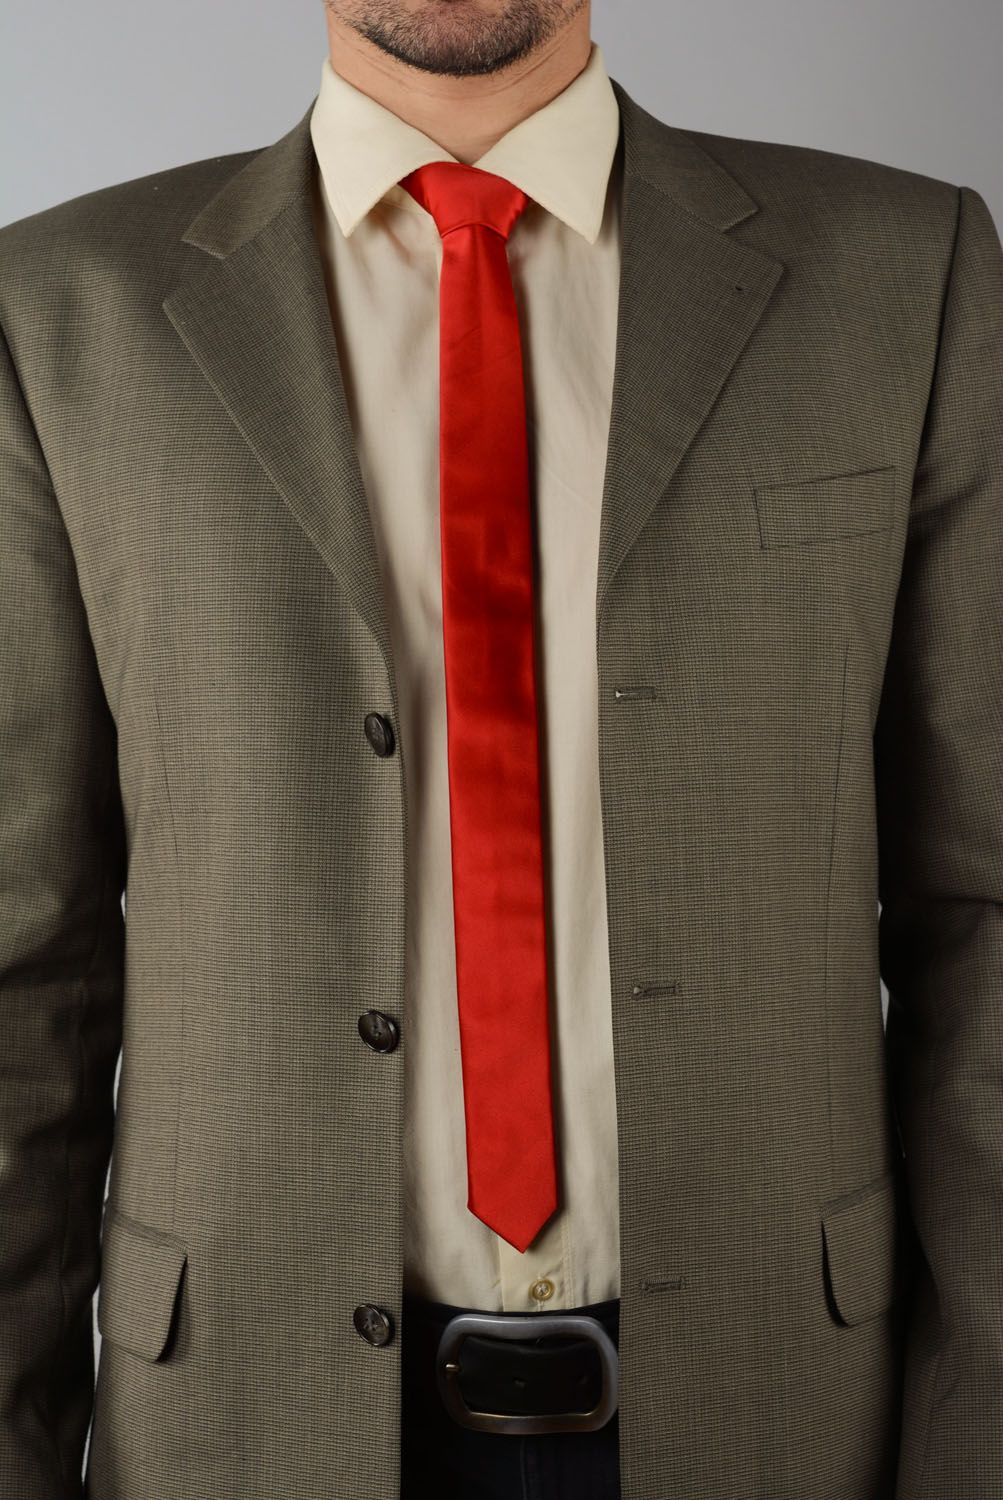 Cravate en satin rouge faite main photo 1